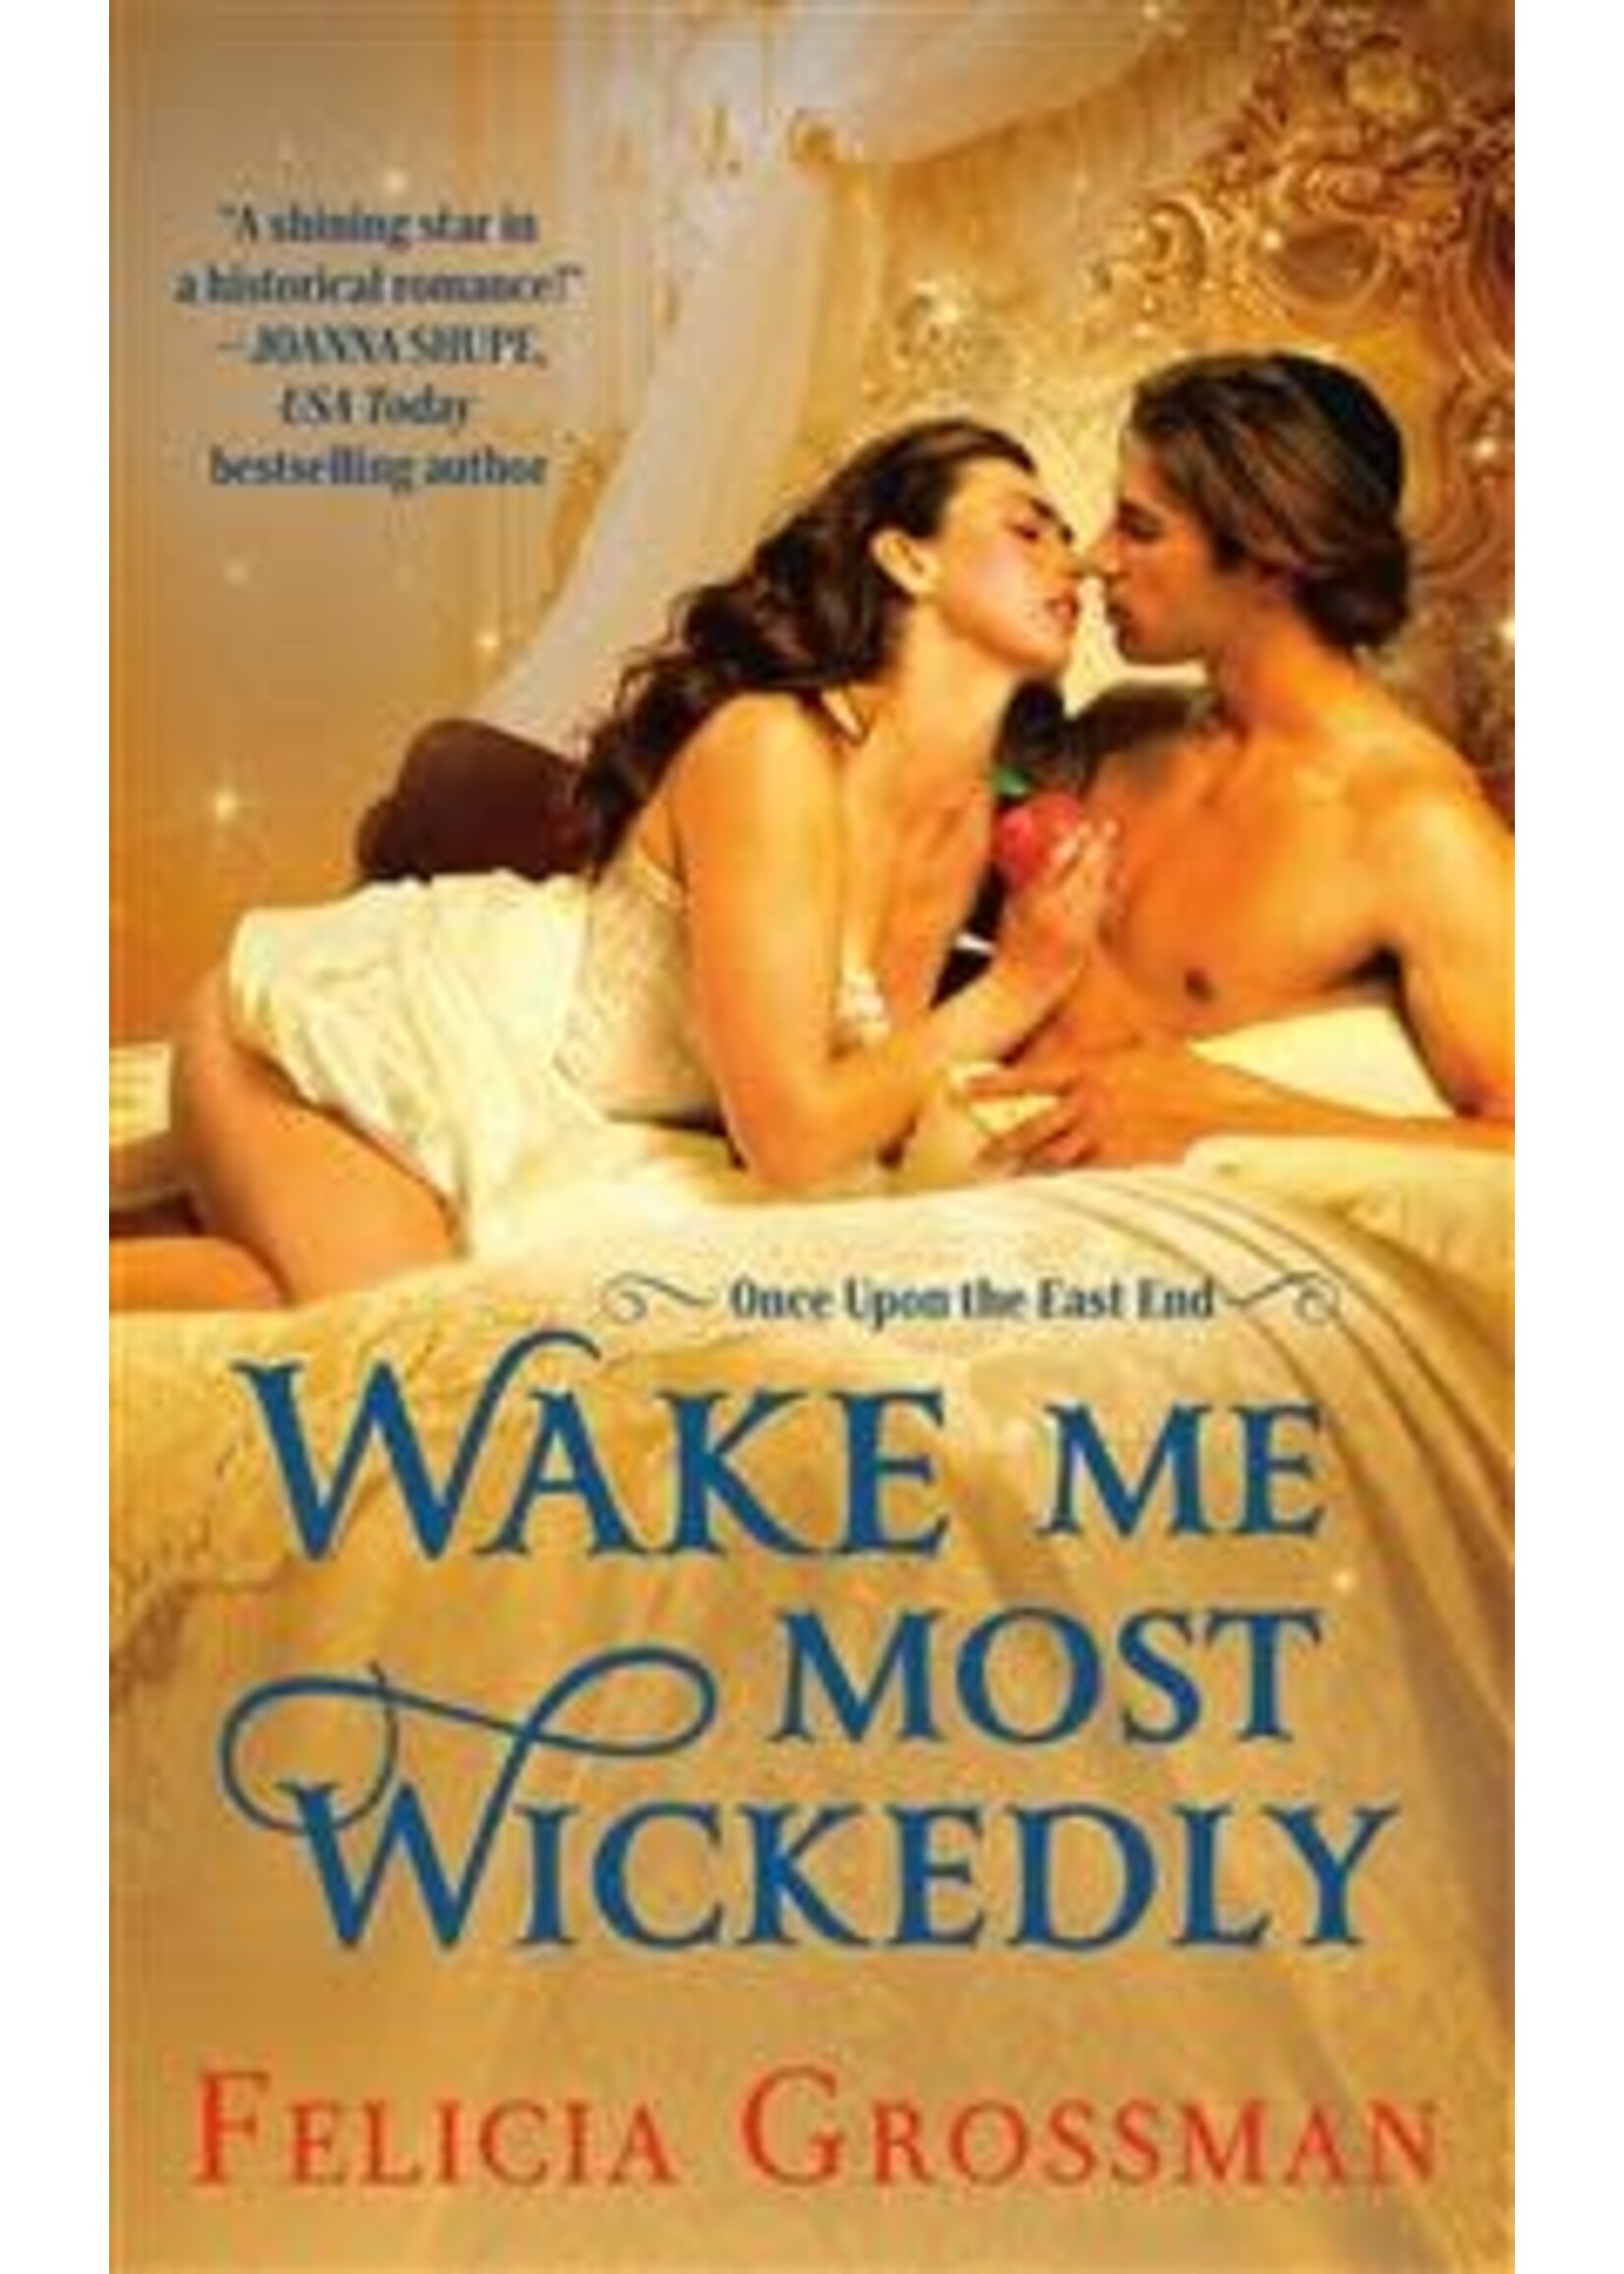 Wake Me Most Wickedly by Felicia Grossman